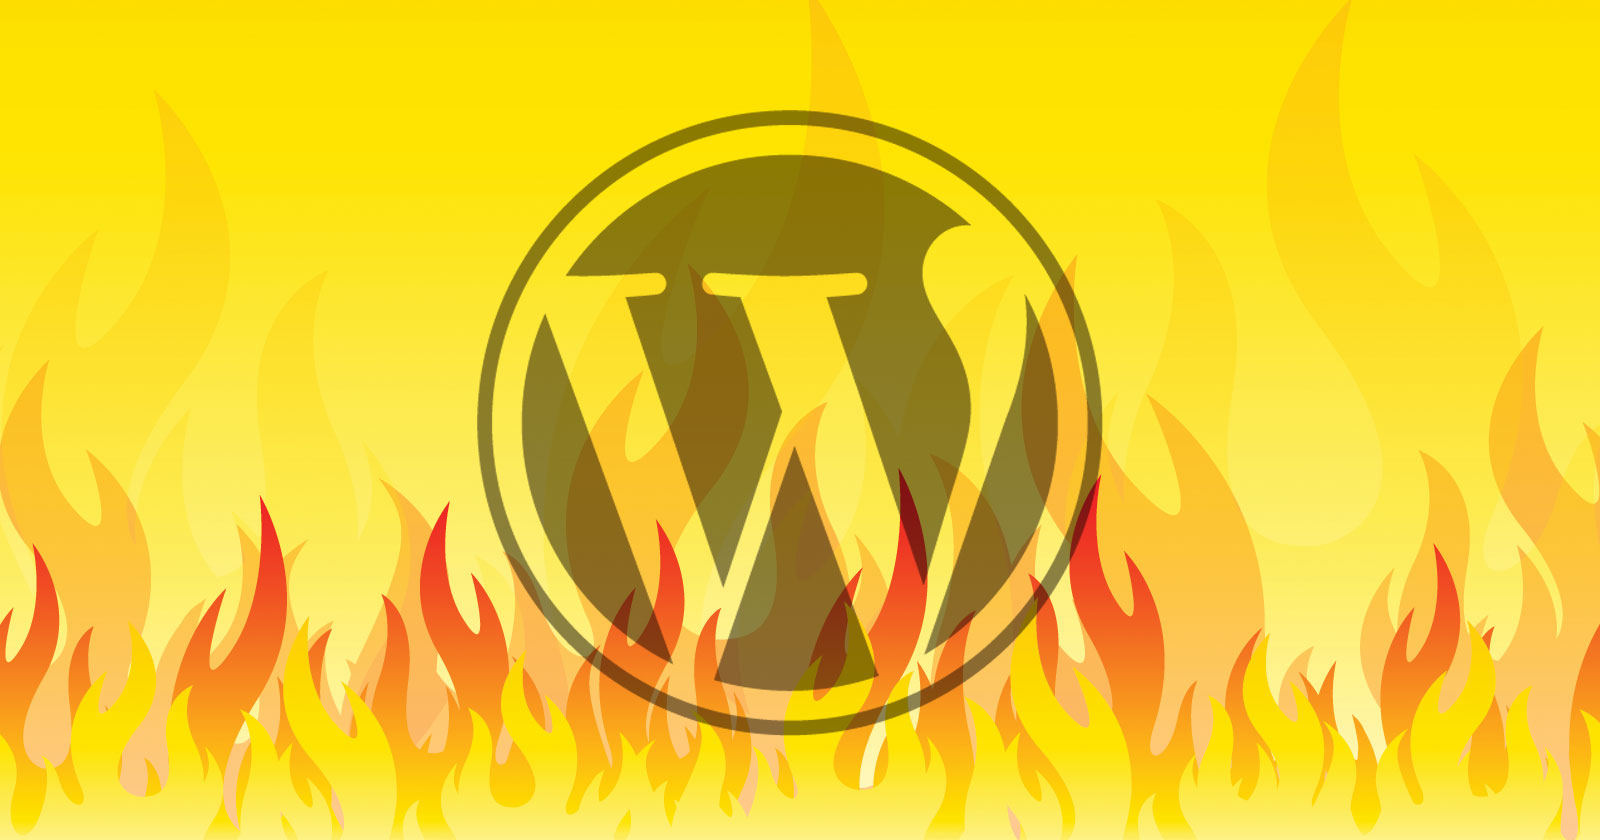 Elementor WordPress Plugin Hit By 6 Vulnerabilities via @sejournal, @martinibuster